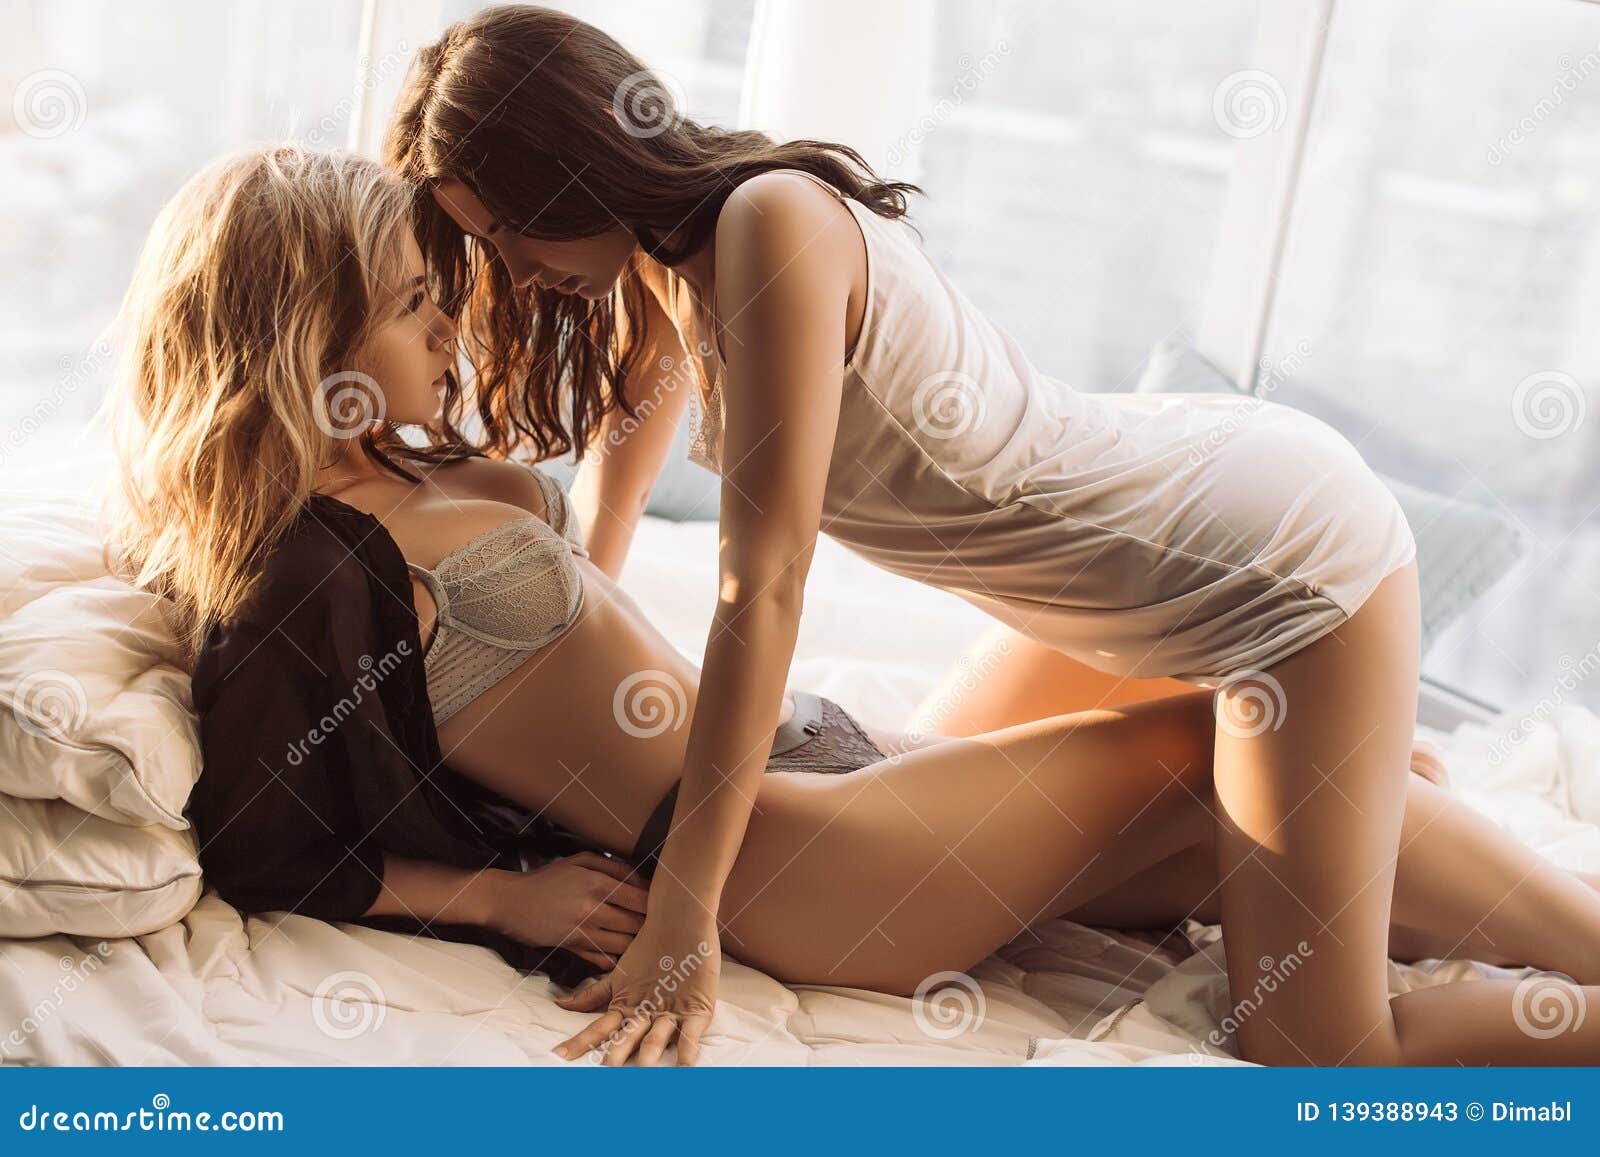 daryl mack add very erotic images photo